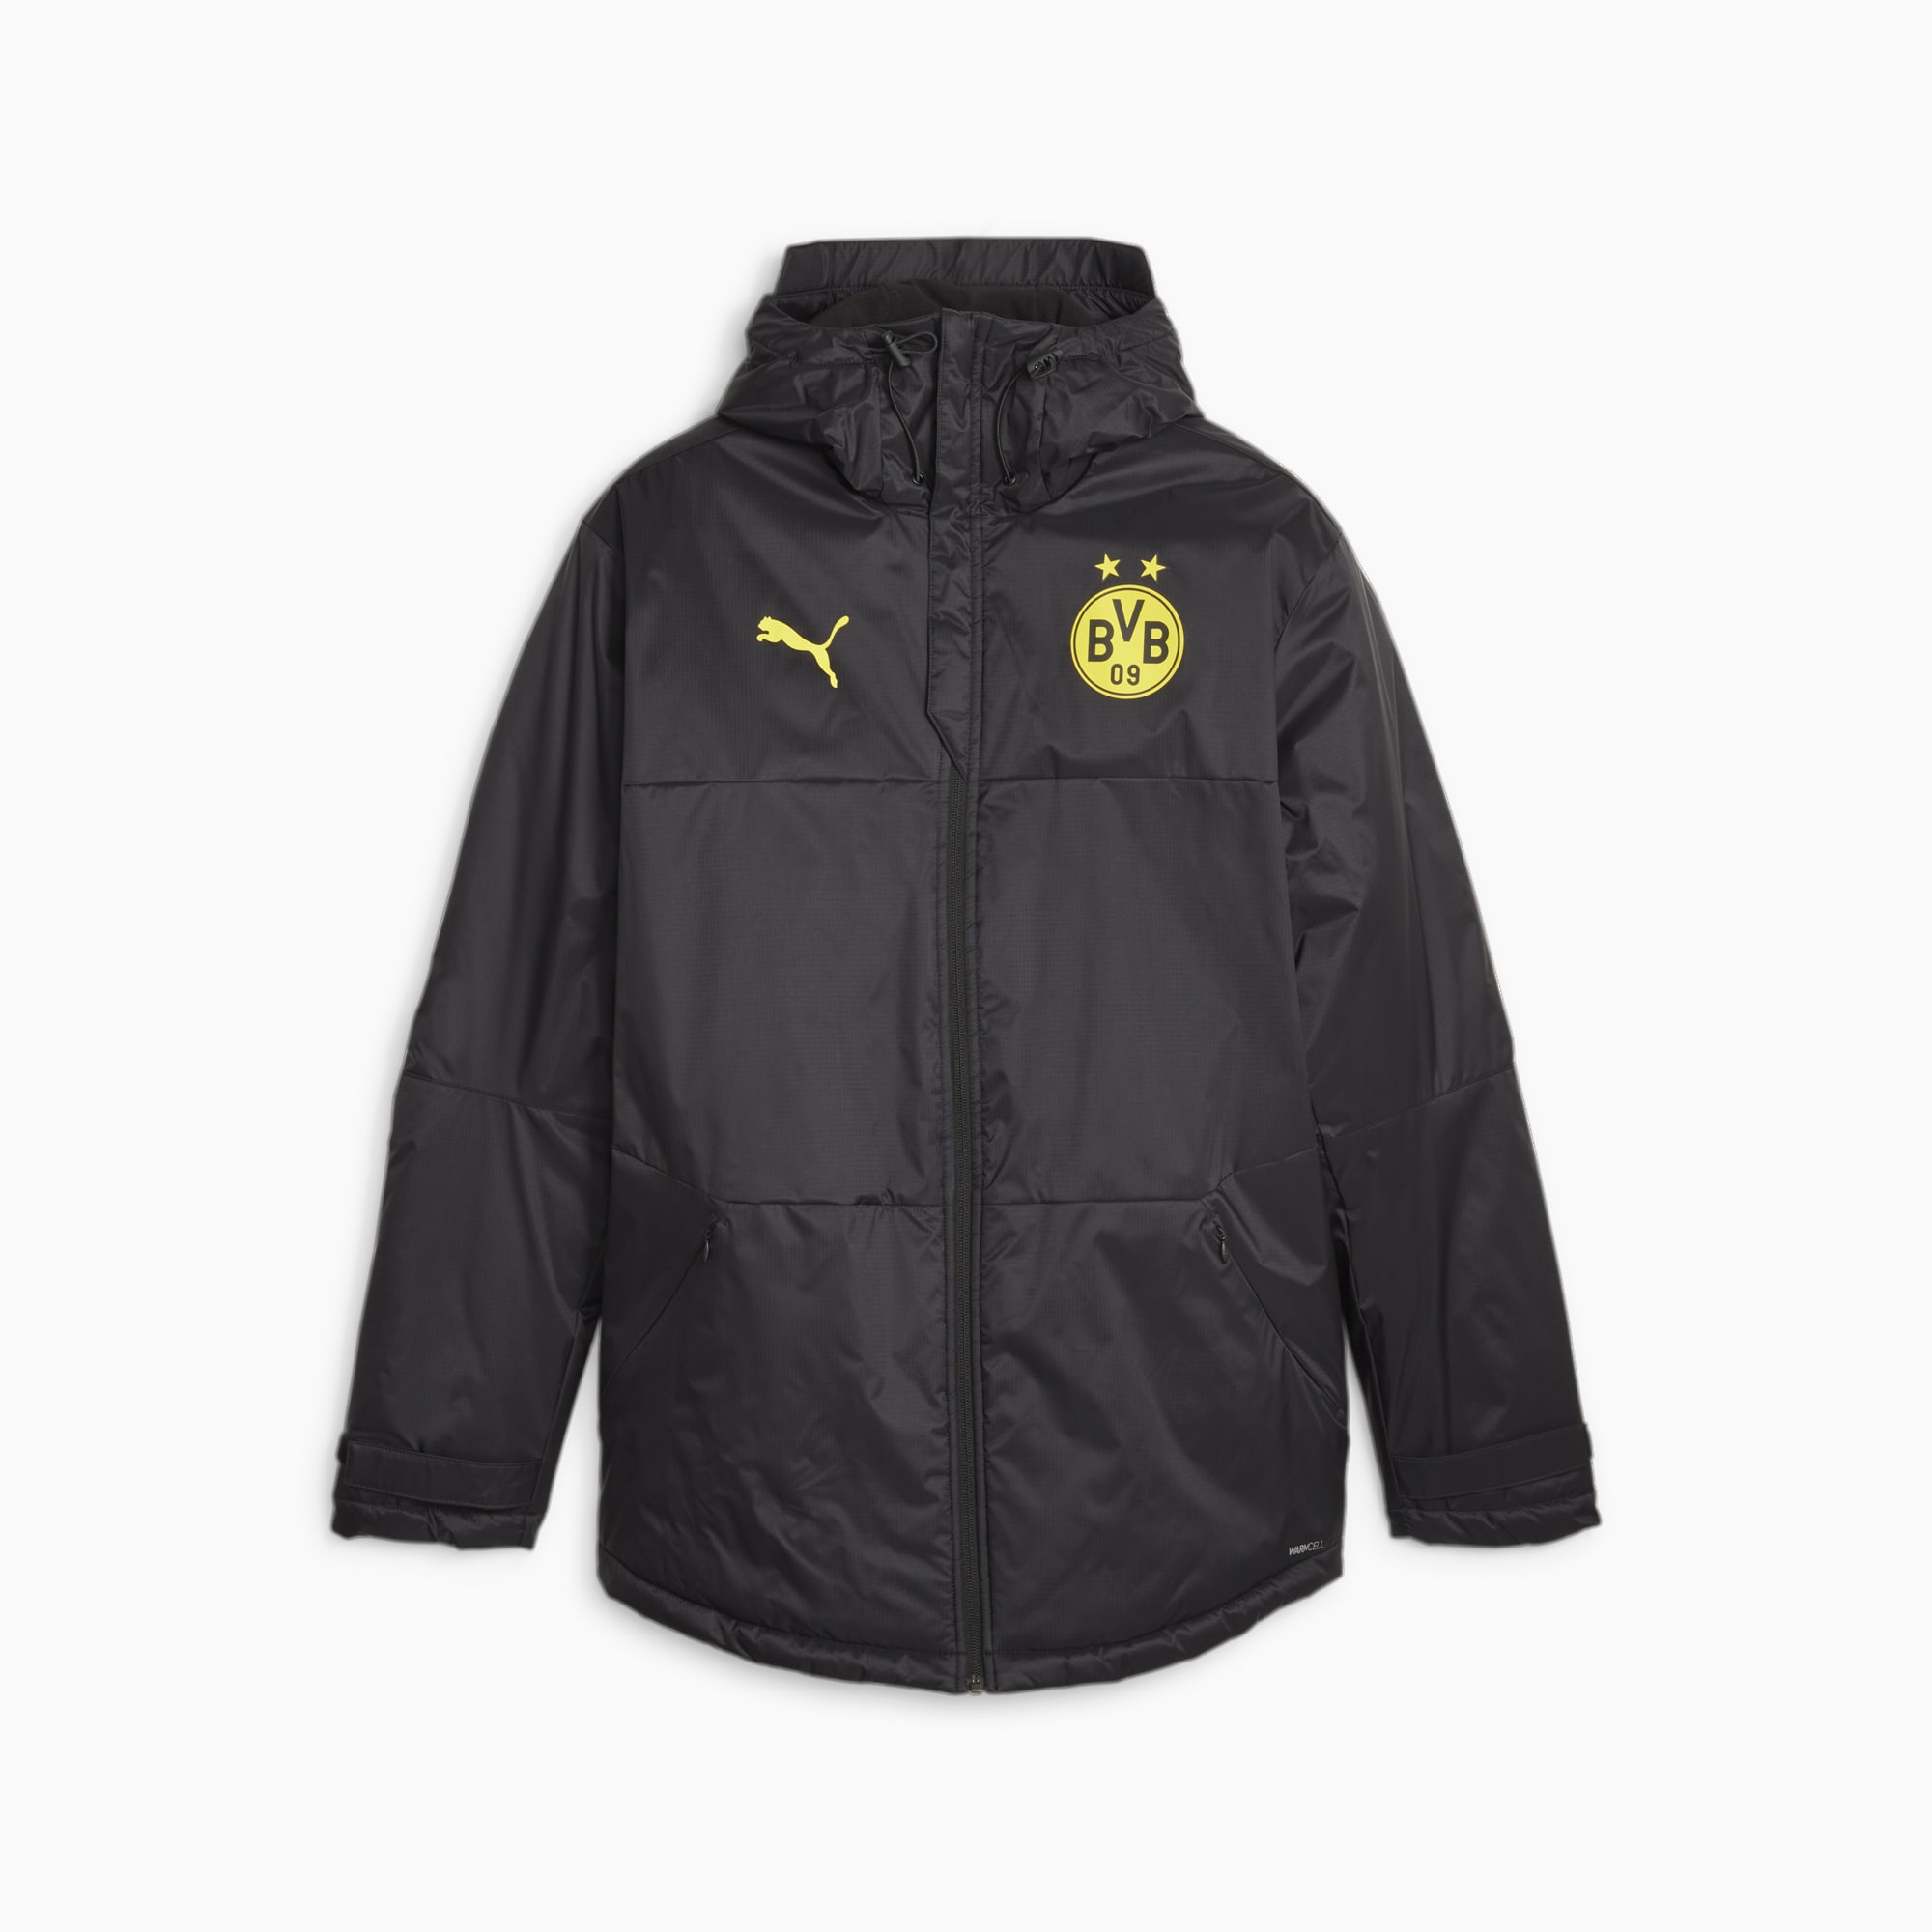 Men's PUMA Borussia Dortmund Football Winter Jacket, Black/Cyber Yellow, Size XS, Clothing